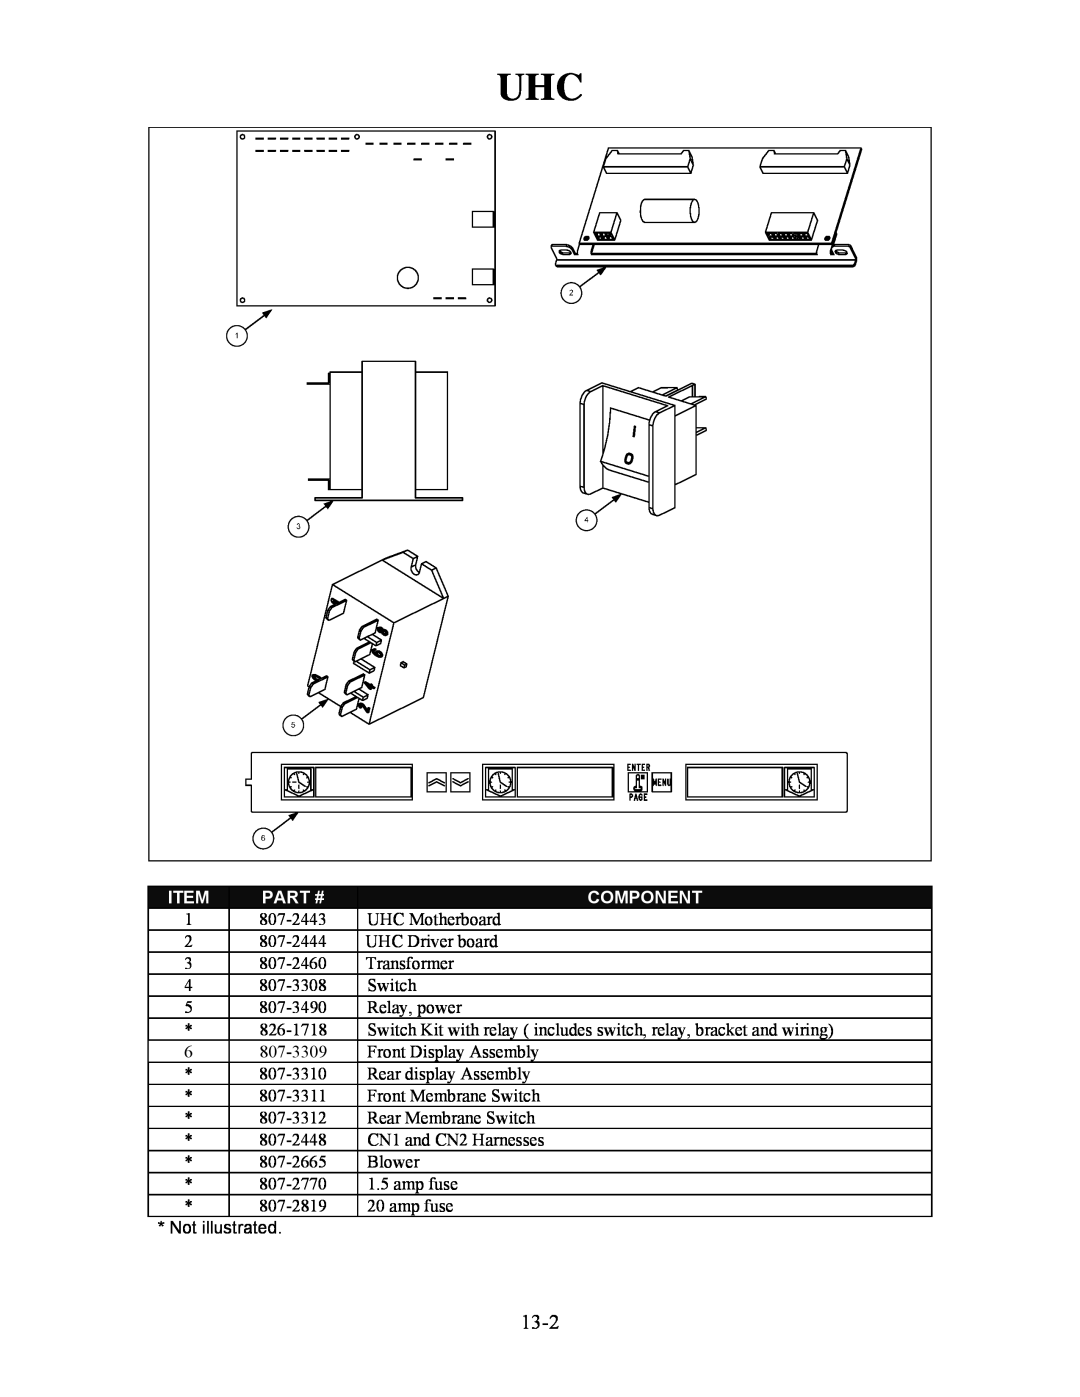 Frymaster H50 manual 13-2, Part #, Component 